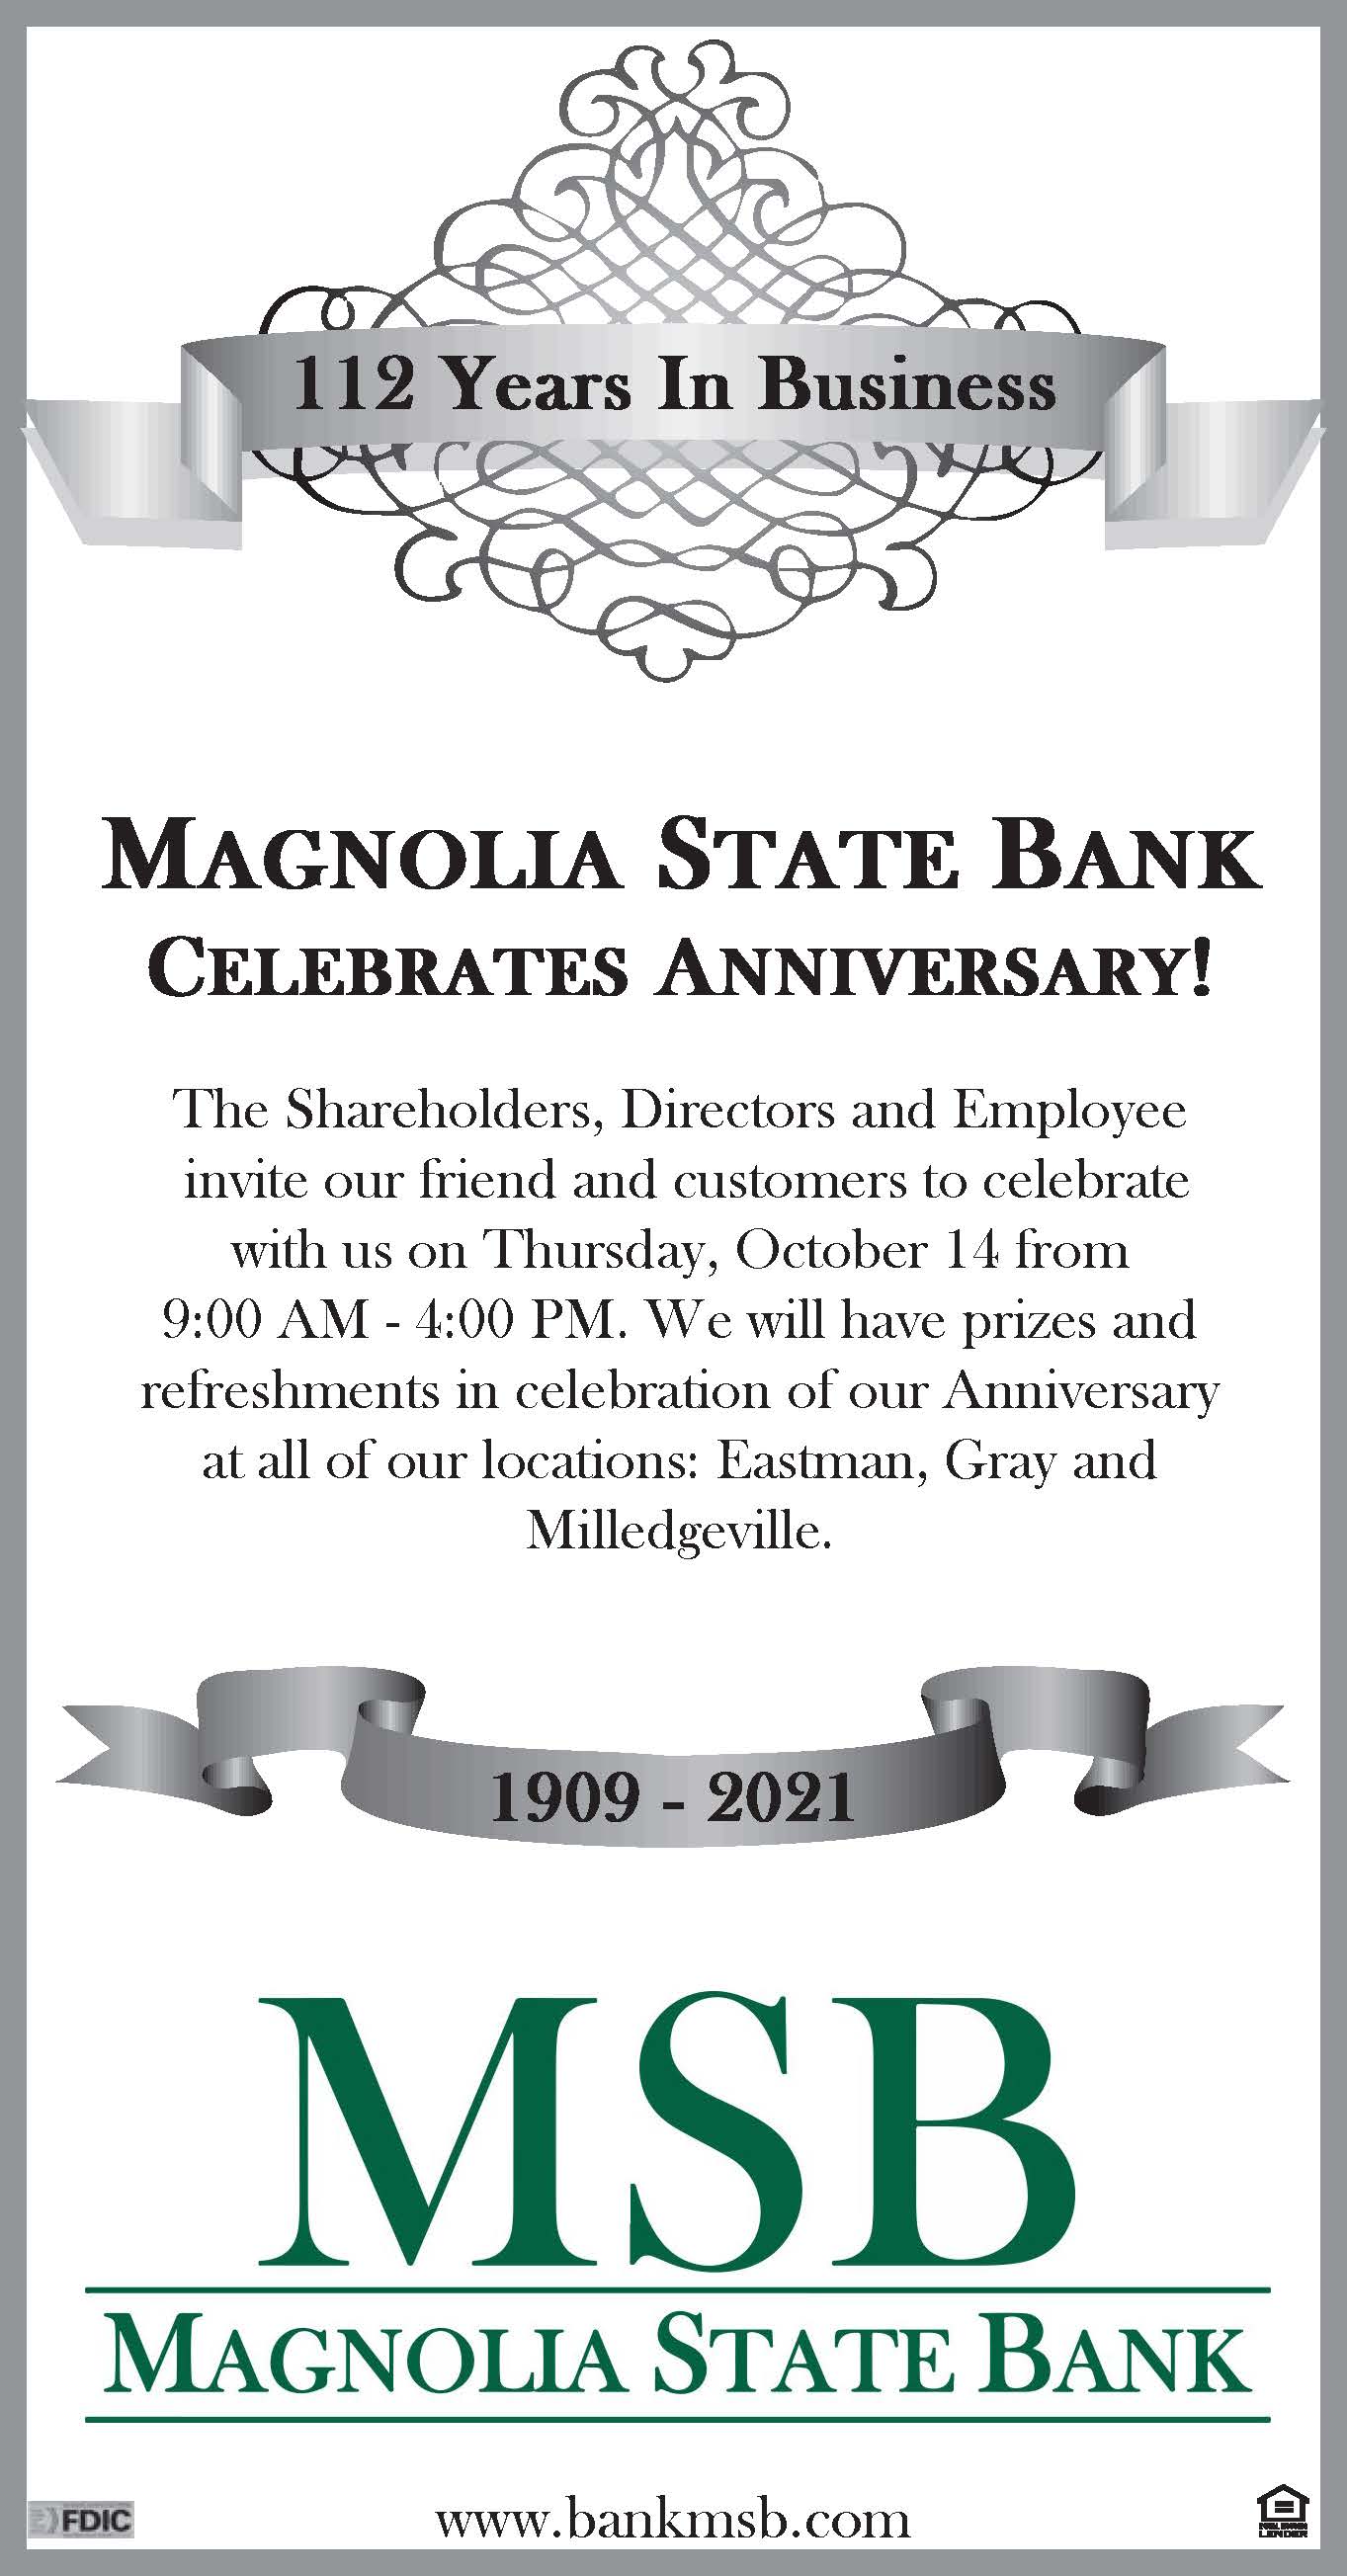 magnolia state bank anniversary celebration ad